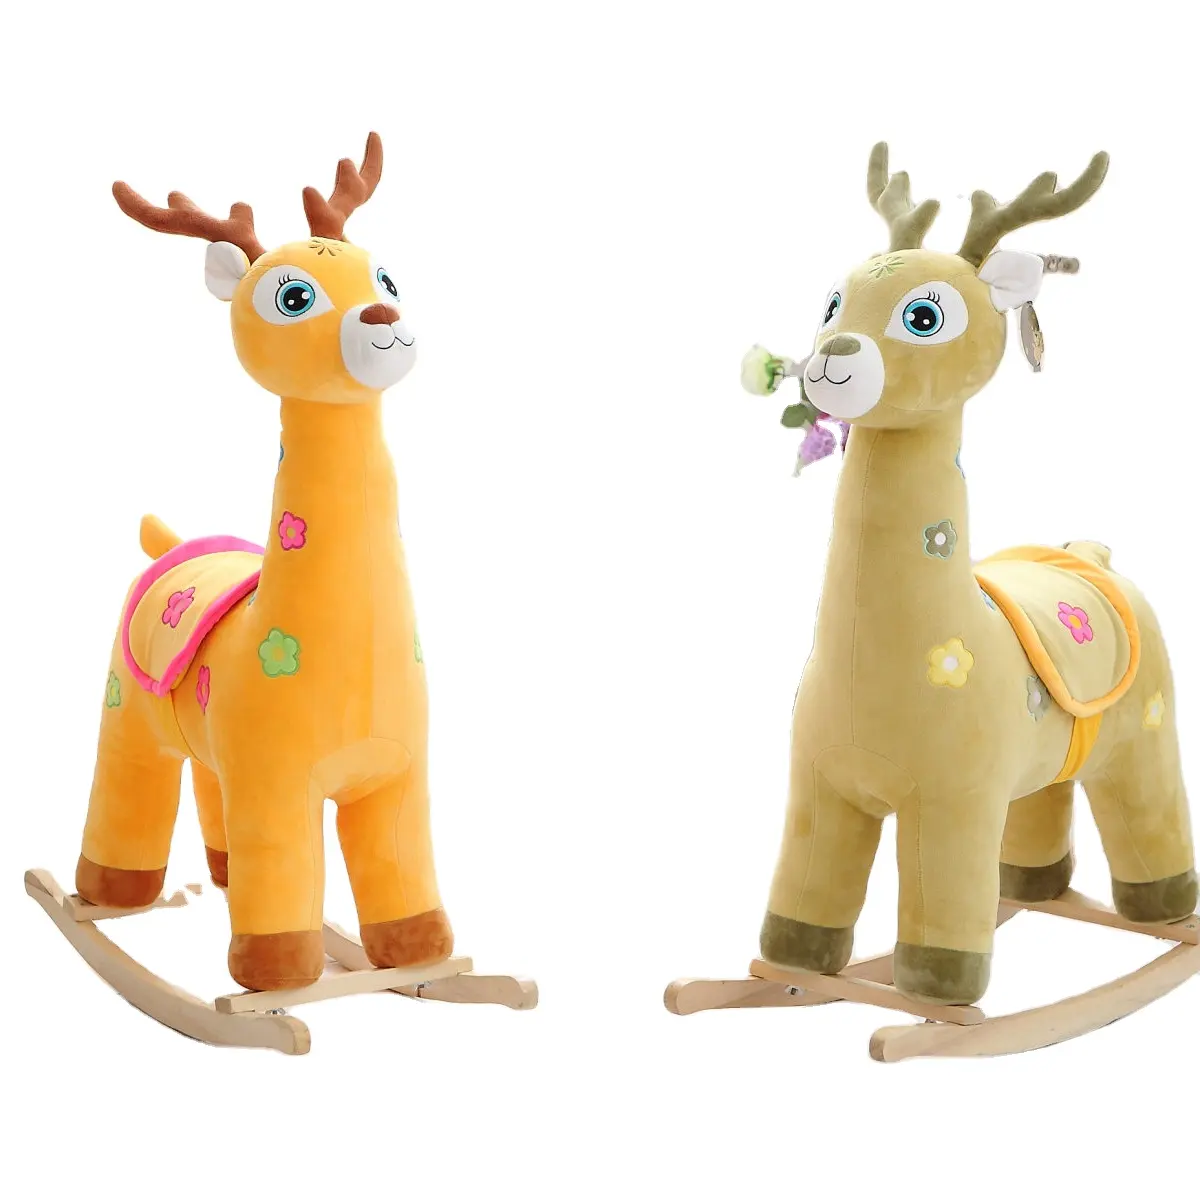 Children's wooden horse giraffe Rocking chair Plush cartoon rocking horse baby creative birthday gift